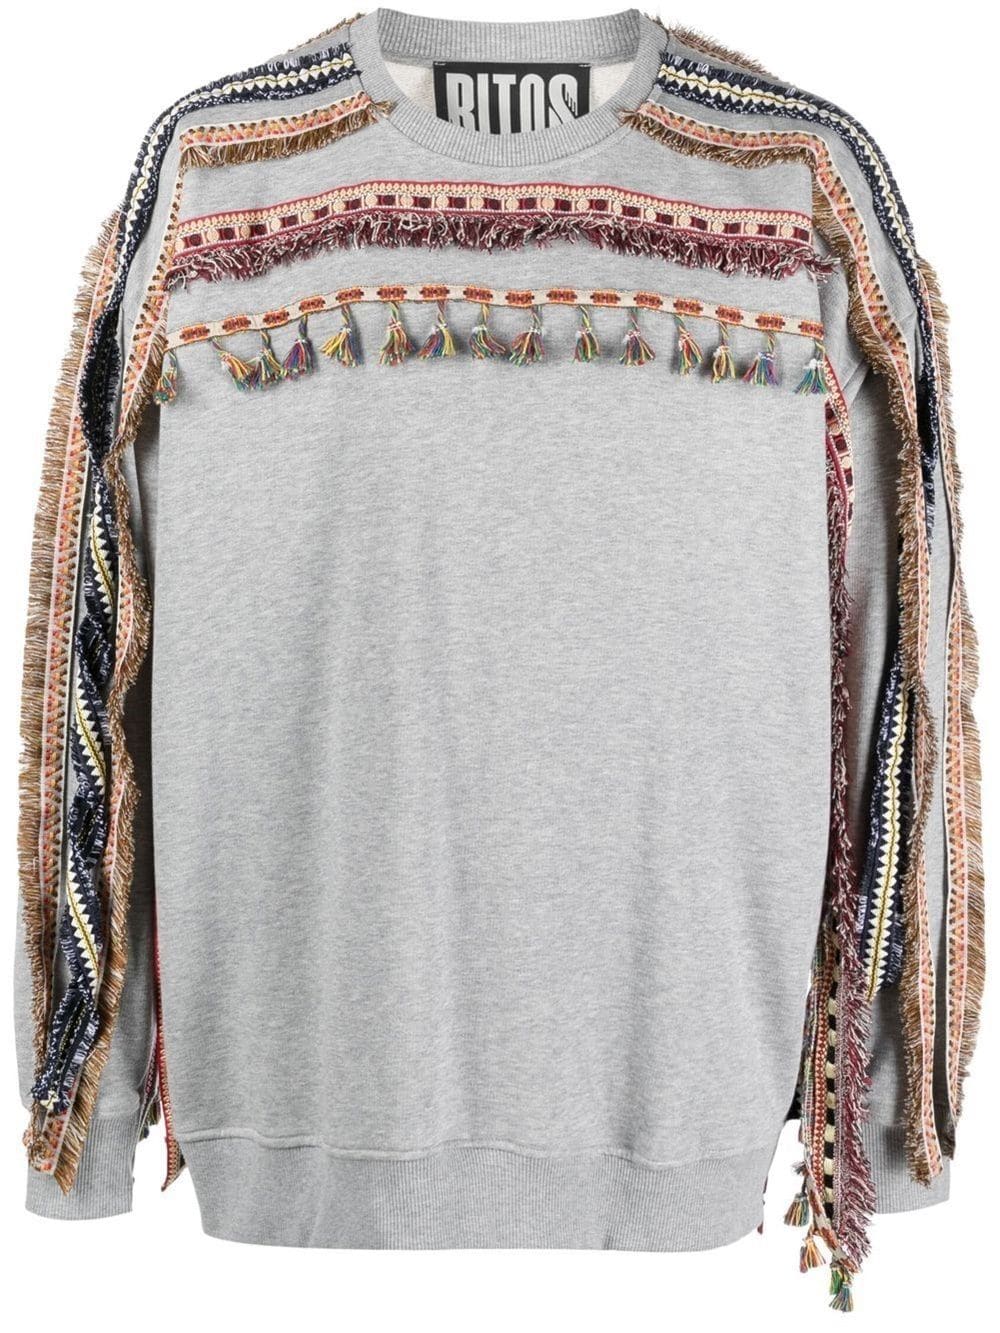 Ritos Tassel-detail Sweatshirt In Grey